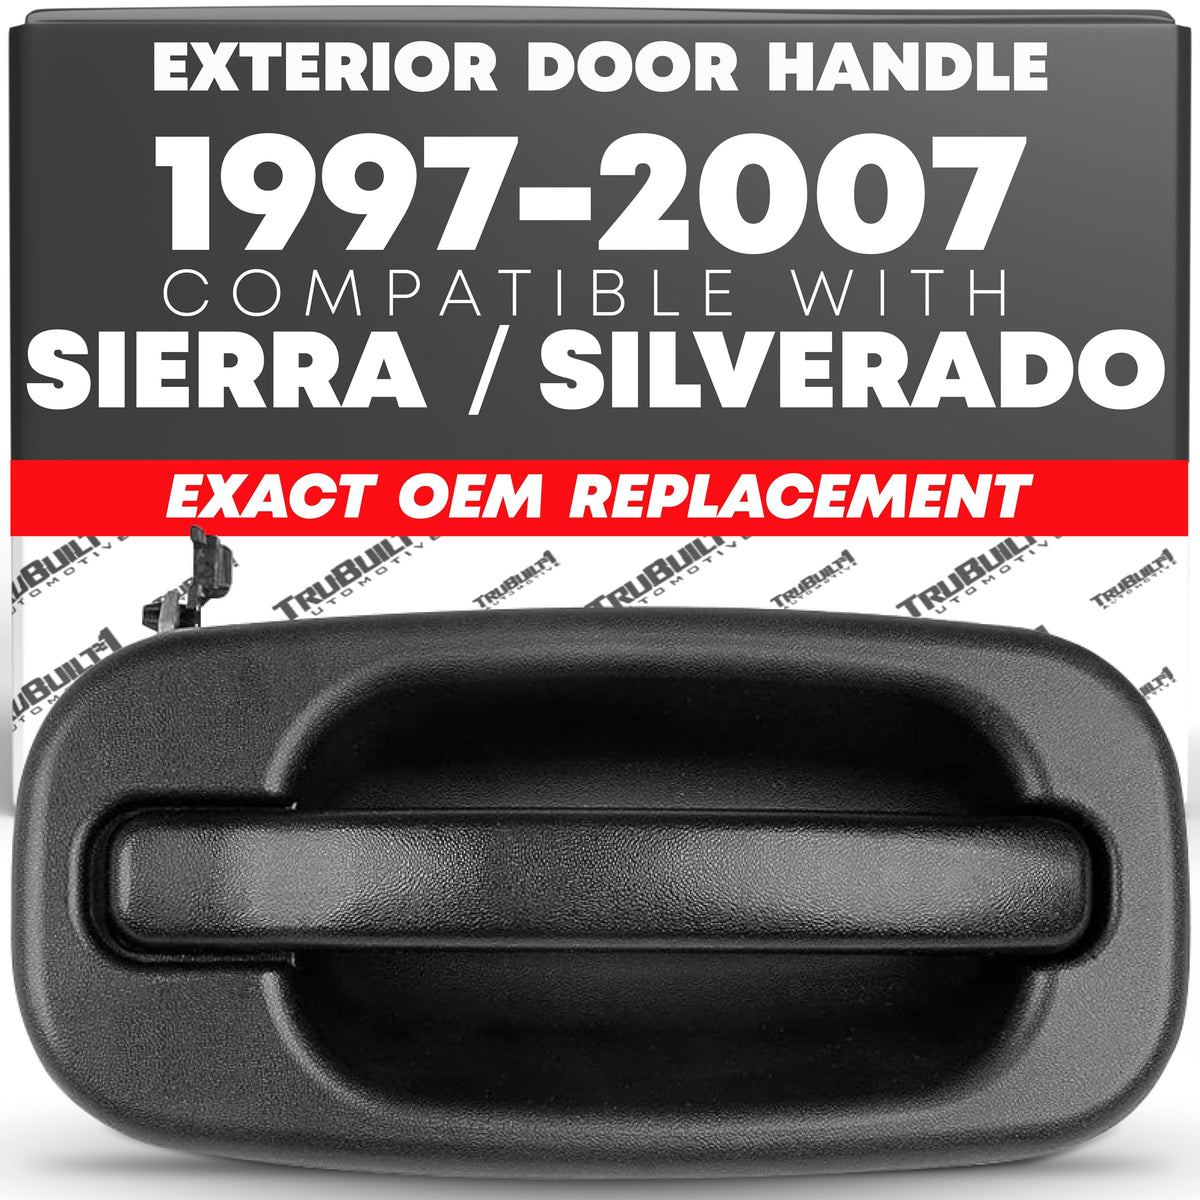 T1A Exterior Door Handle Front Passenger Right Side Replacement for 1999-2007 Chevrolet Silverado & GMC Sierra, Fits Avalanche Escalade Yukon XL Yukon Tahoe Suburban Denali T1A 15034986